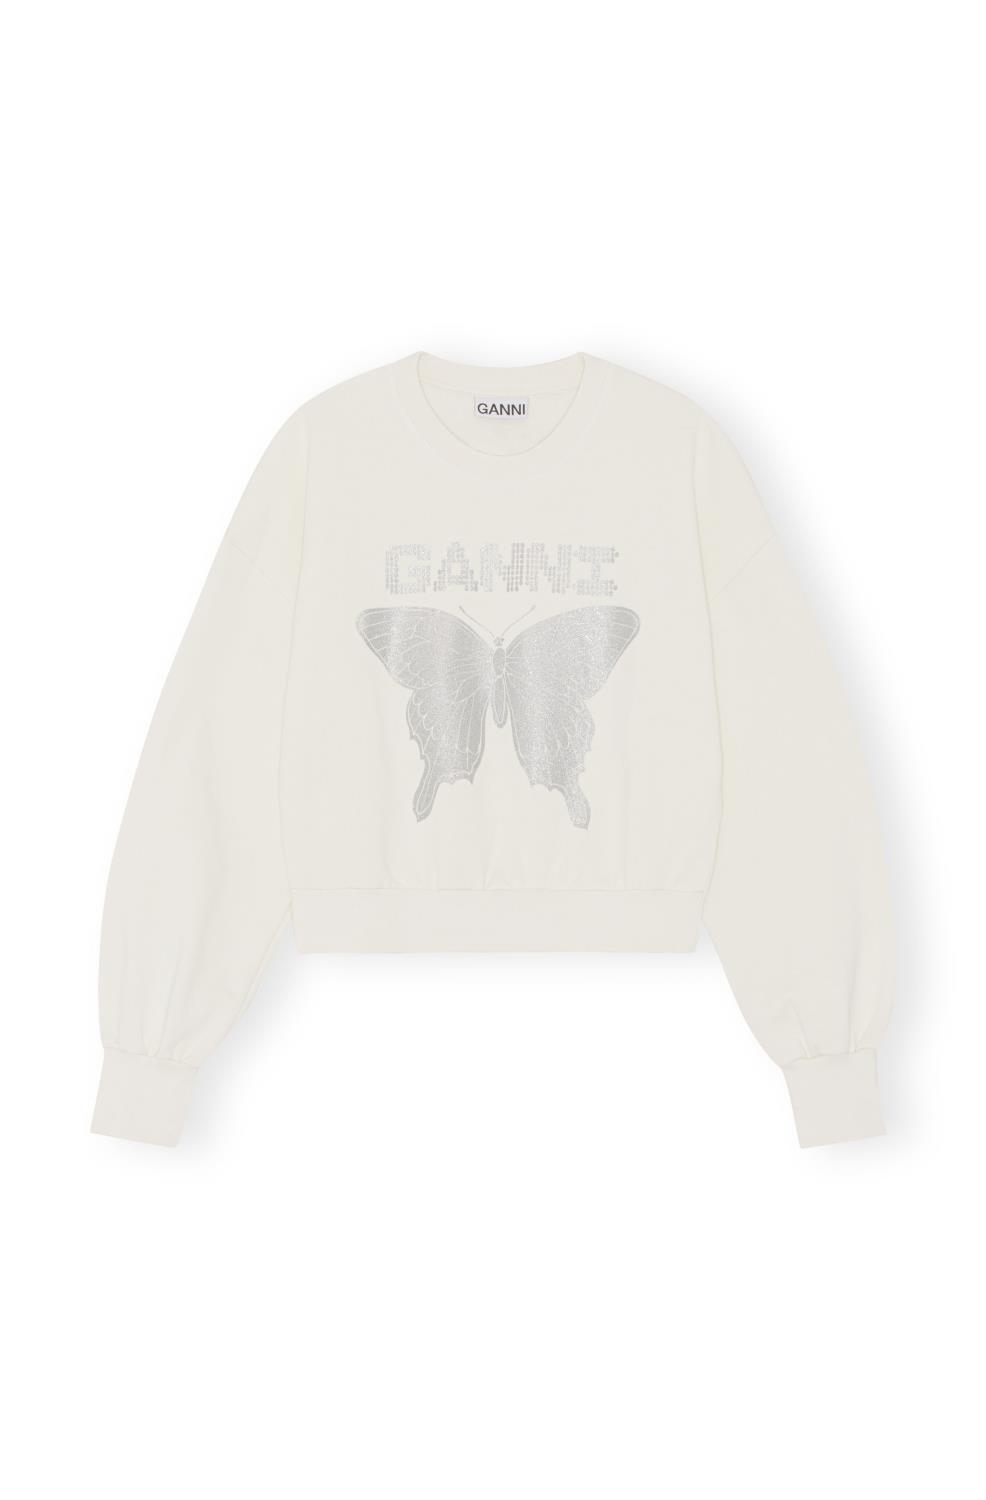 Ganni, Isoli Butterfly Sweatshirt